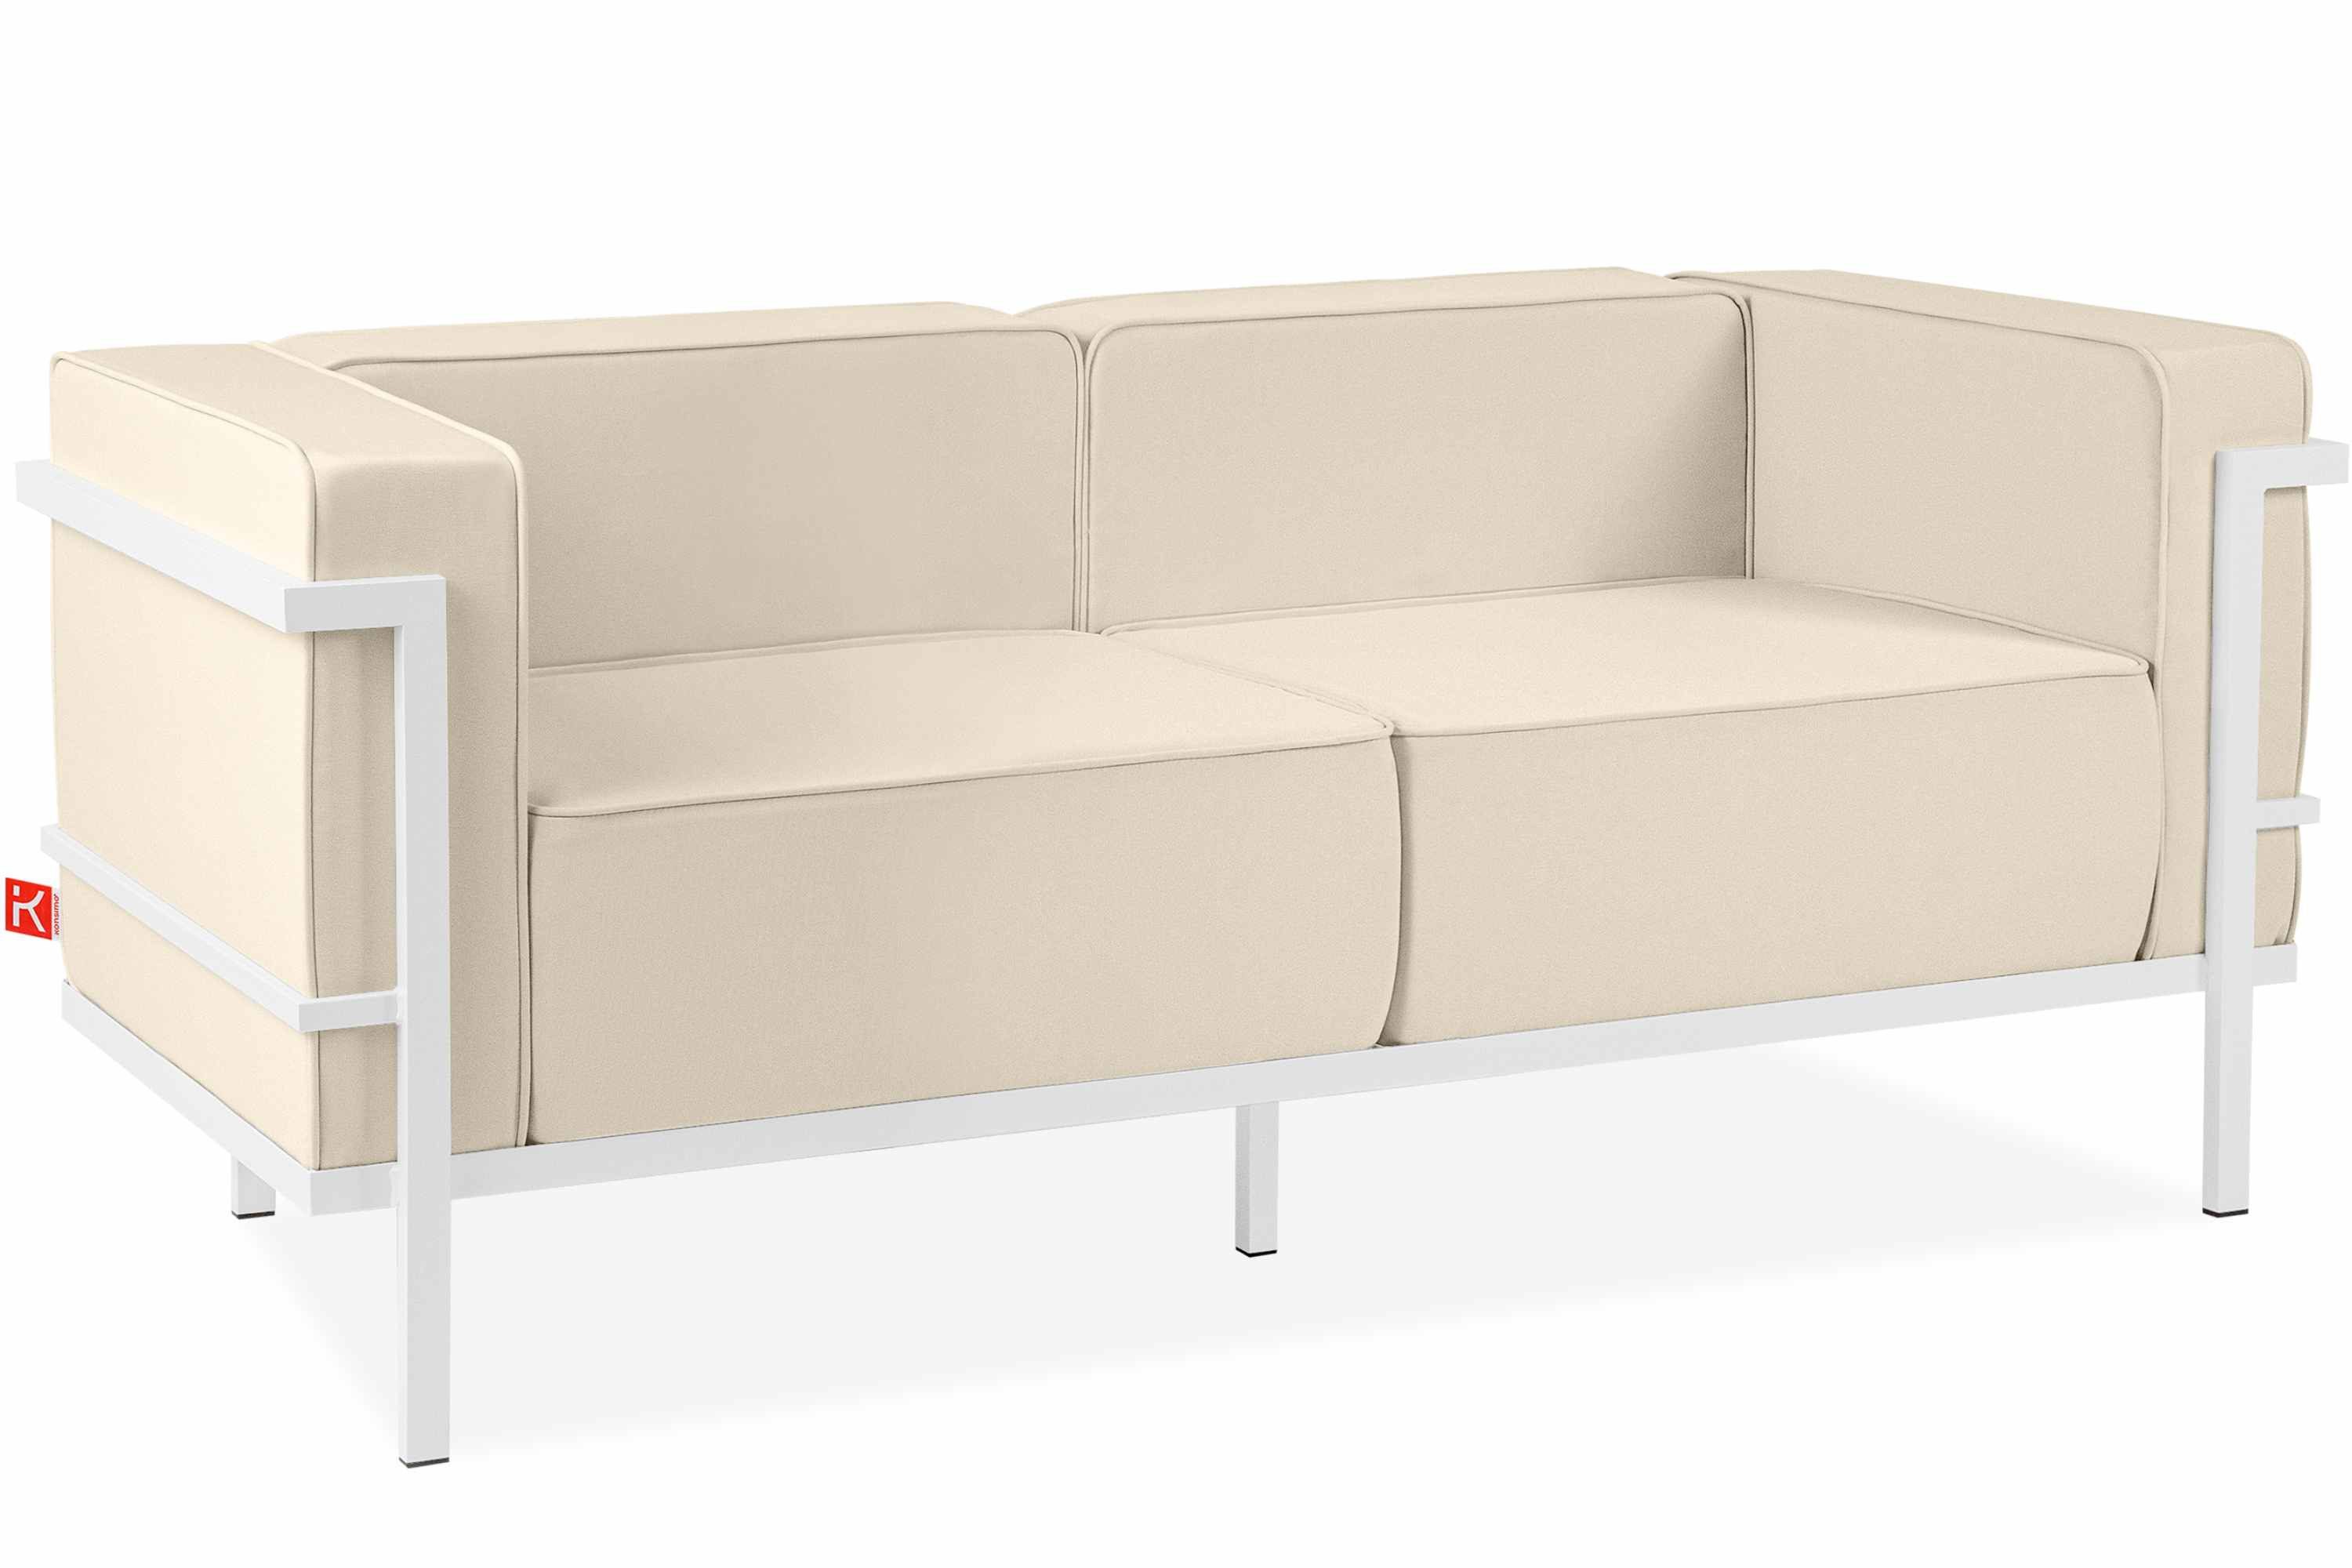 Konsimo Loungesofa TRIGLO Sofa 2-Personen, hergestellt in der EU, Modern, handgefertigt, Stahlrahmen